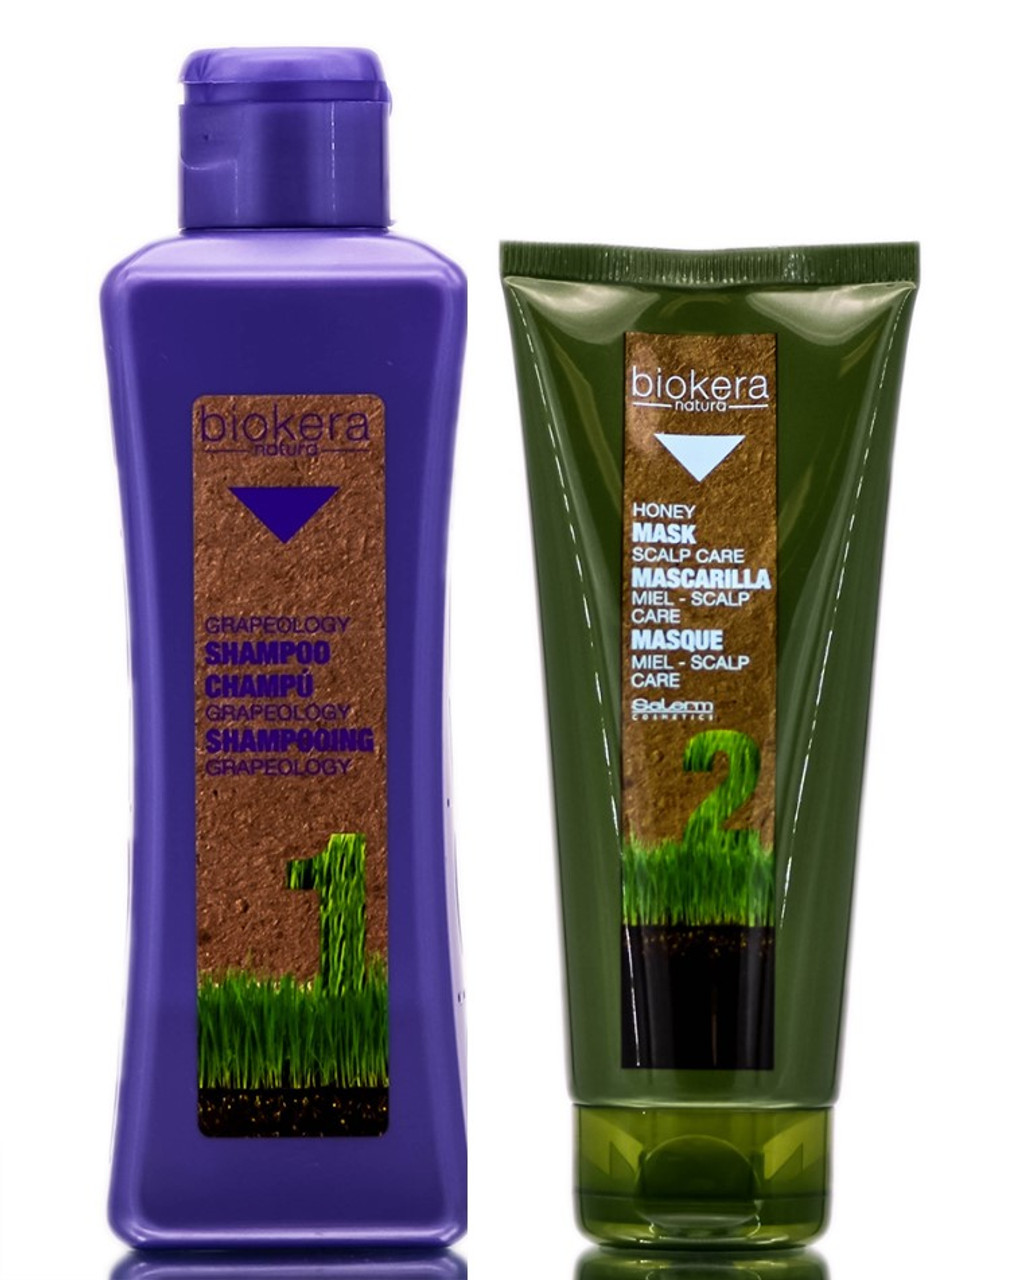 Salerm Biokera Natura Grapeology Shampoo 1 & Honey Mask Scalp Care  